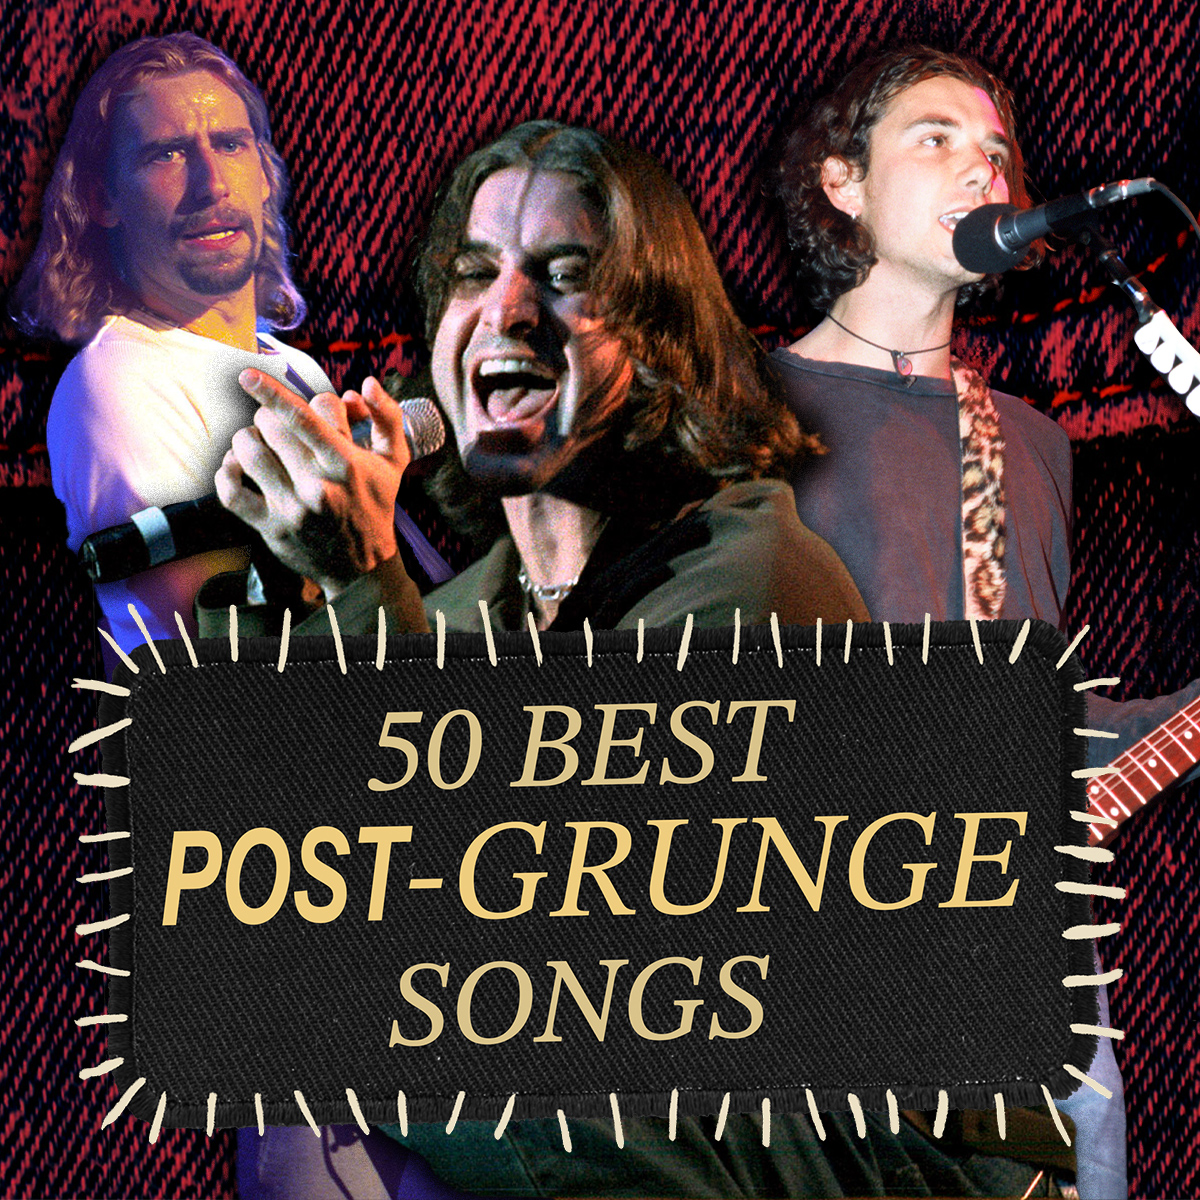 50 Songs That Prove Butt Rock Still Rocks: Ranking the Best Post-Grunge Music